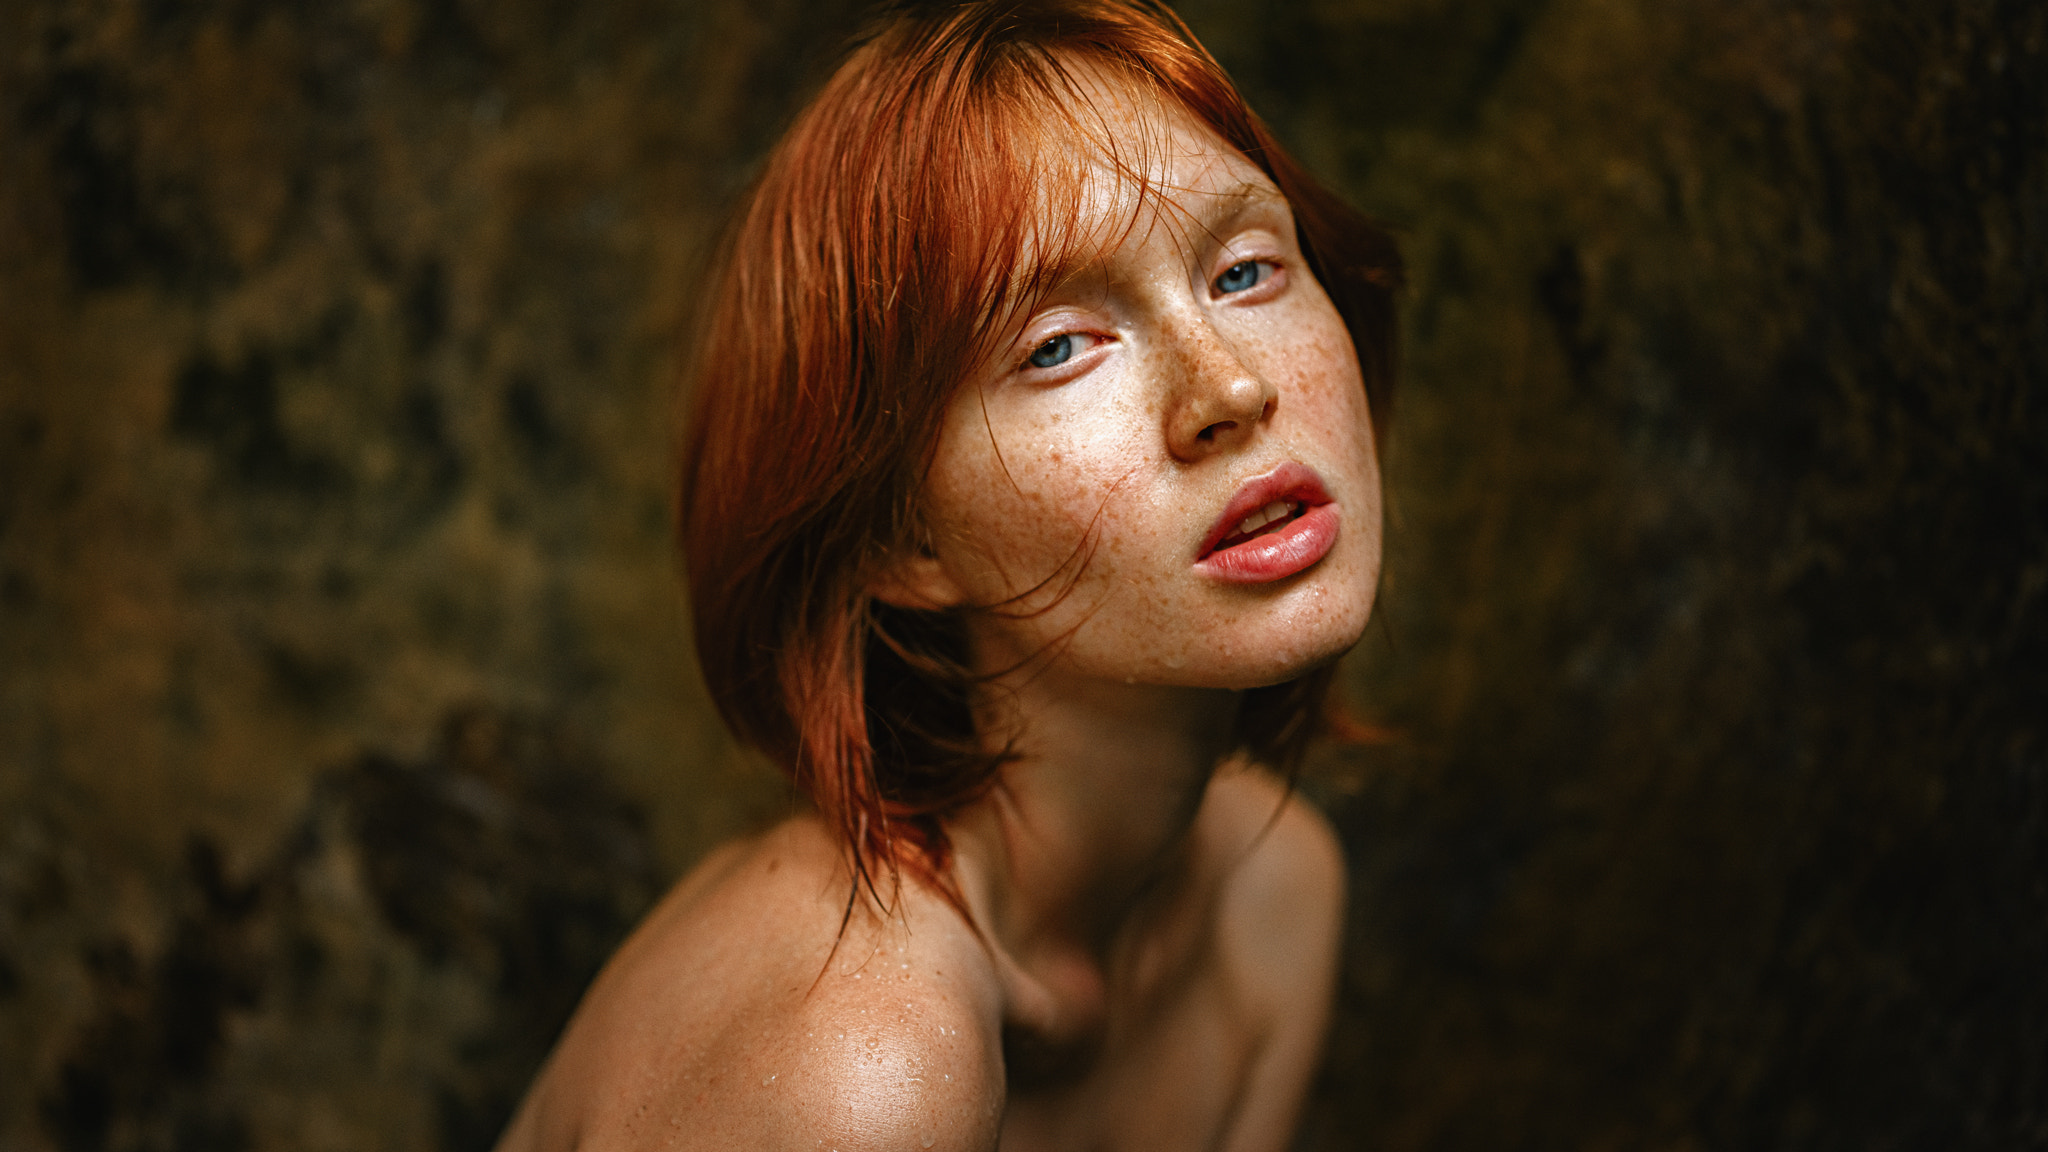 People 2048x1152 Georgy Chernyadyev women Arina Bikbulatova redhead freckles wet bare shoulders blue eyes simple background portrait implied nude